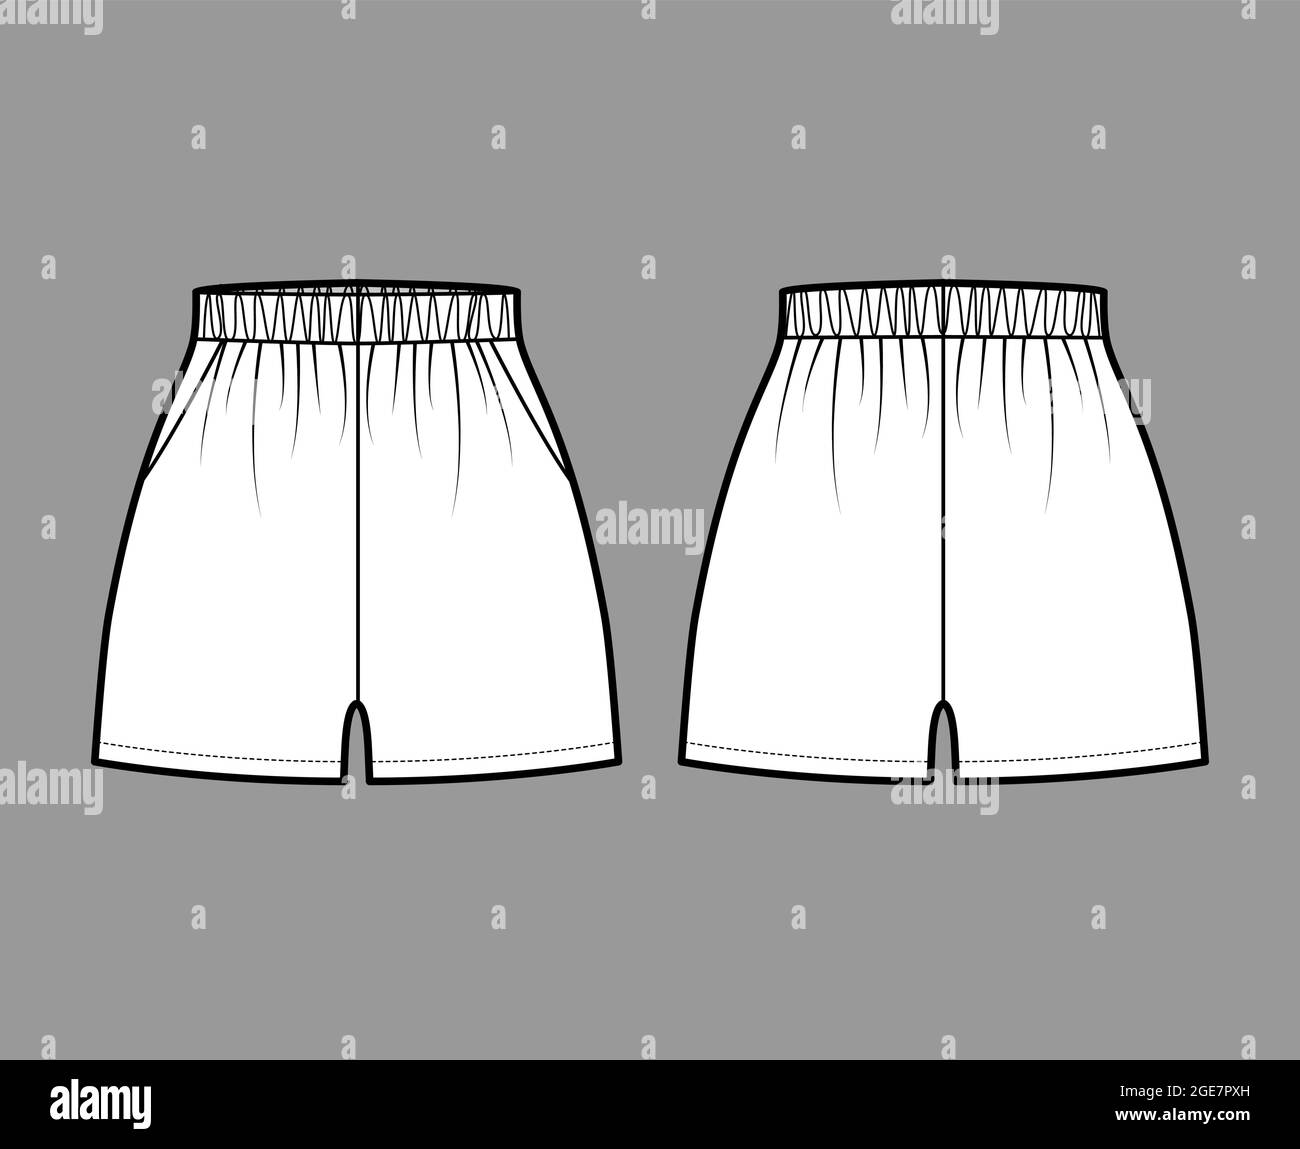 Sport training shorts Activewear technical fashion illustration with ...